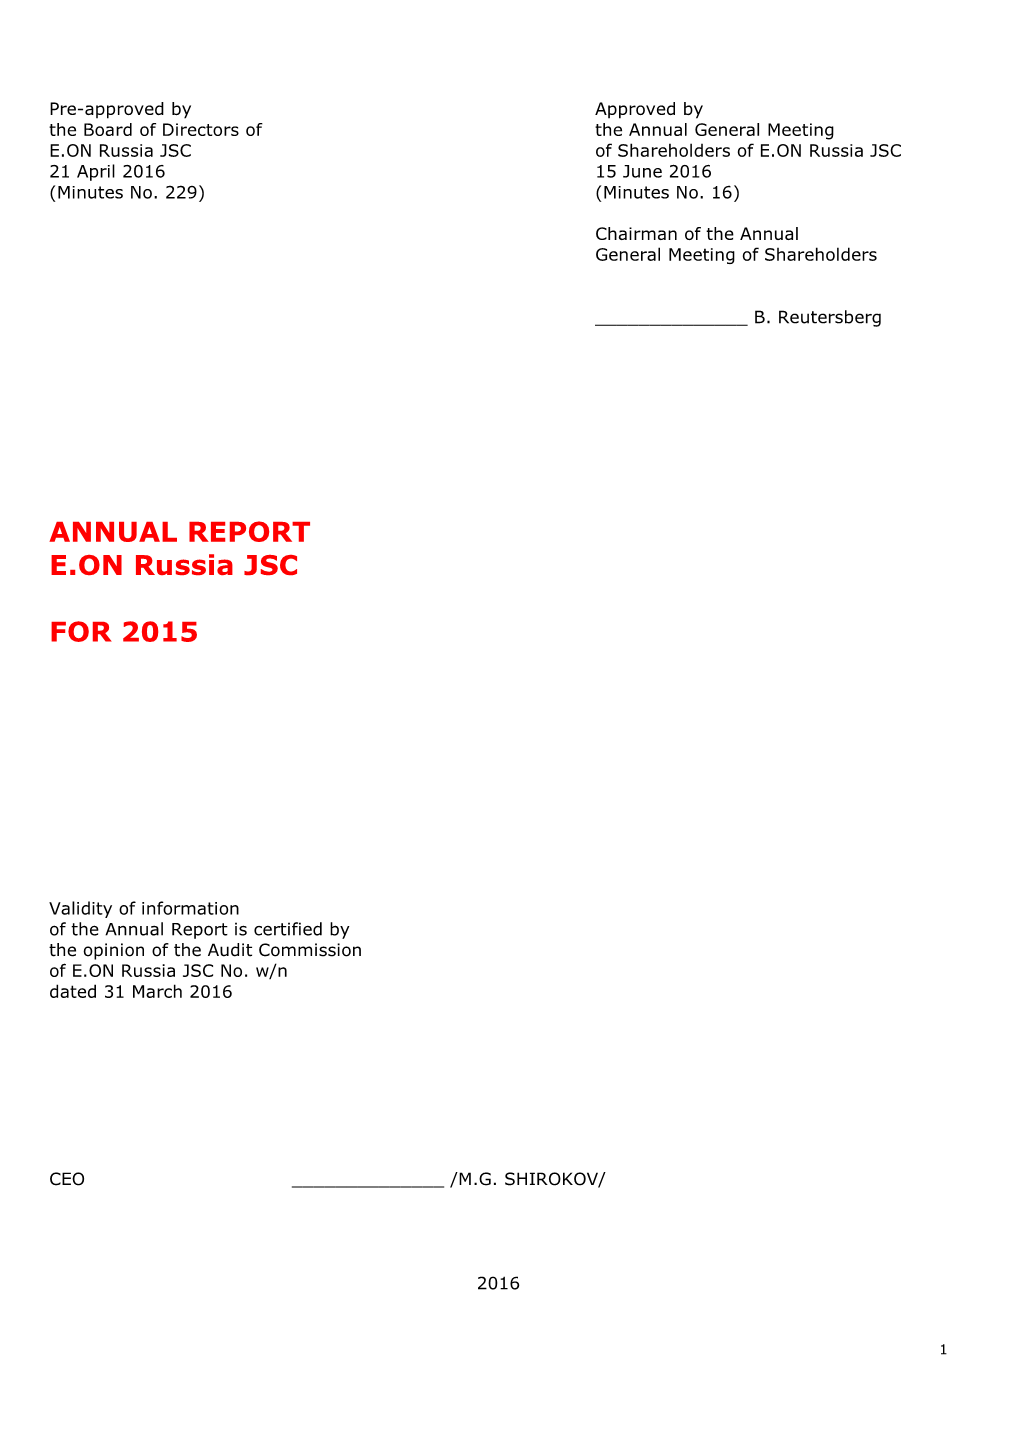 ANNUAL REPORT E.ON Russia JSC for 2015